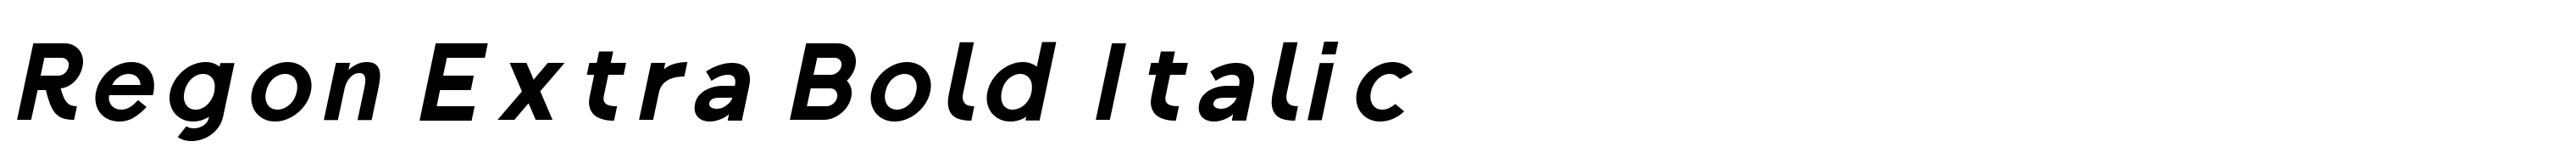 Regon Extra Bold Italic